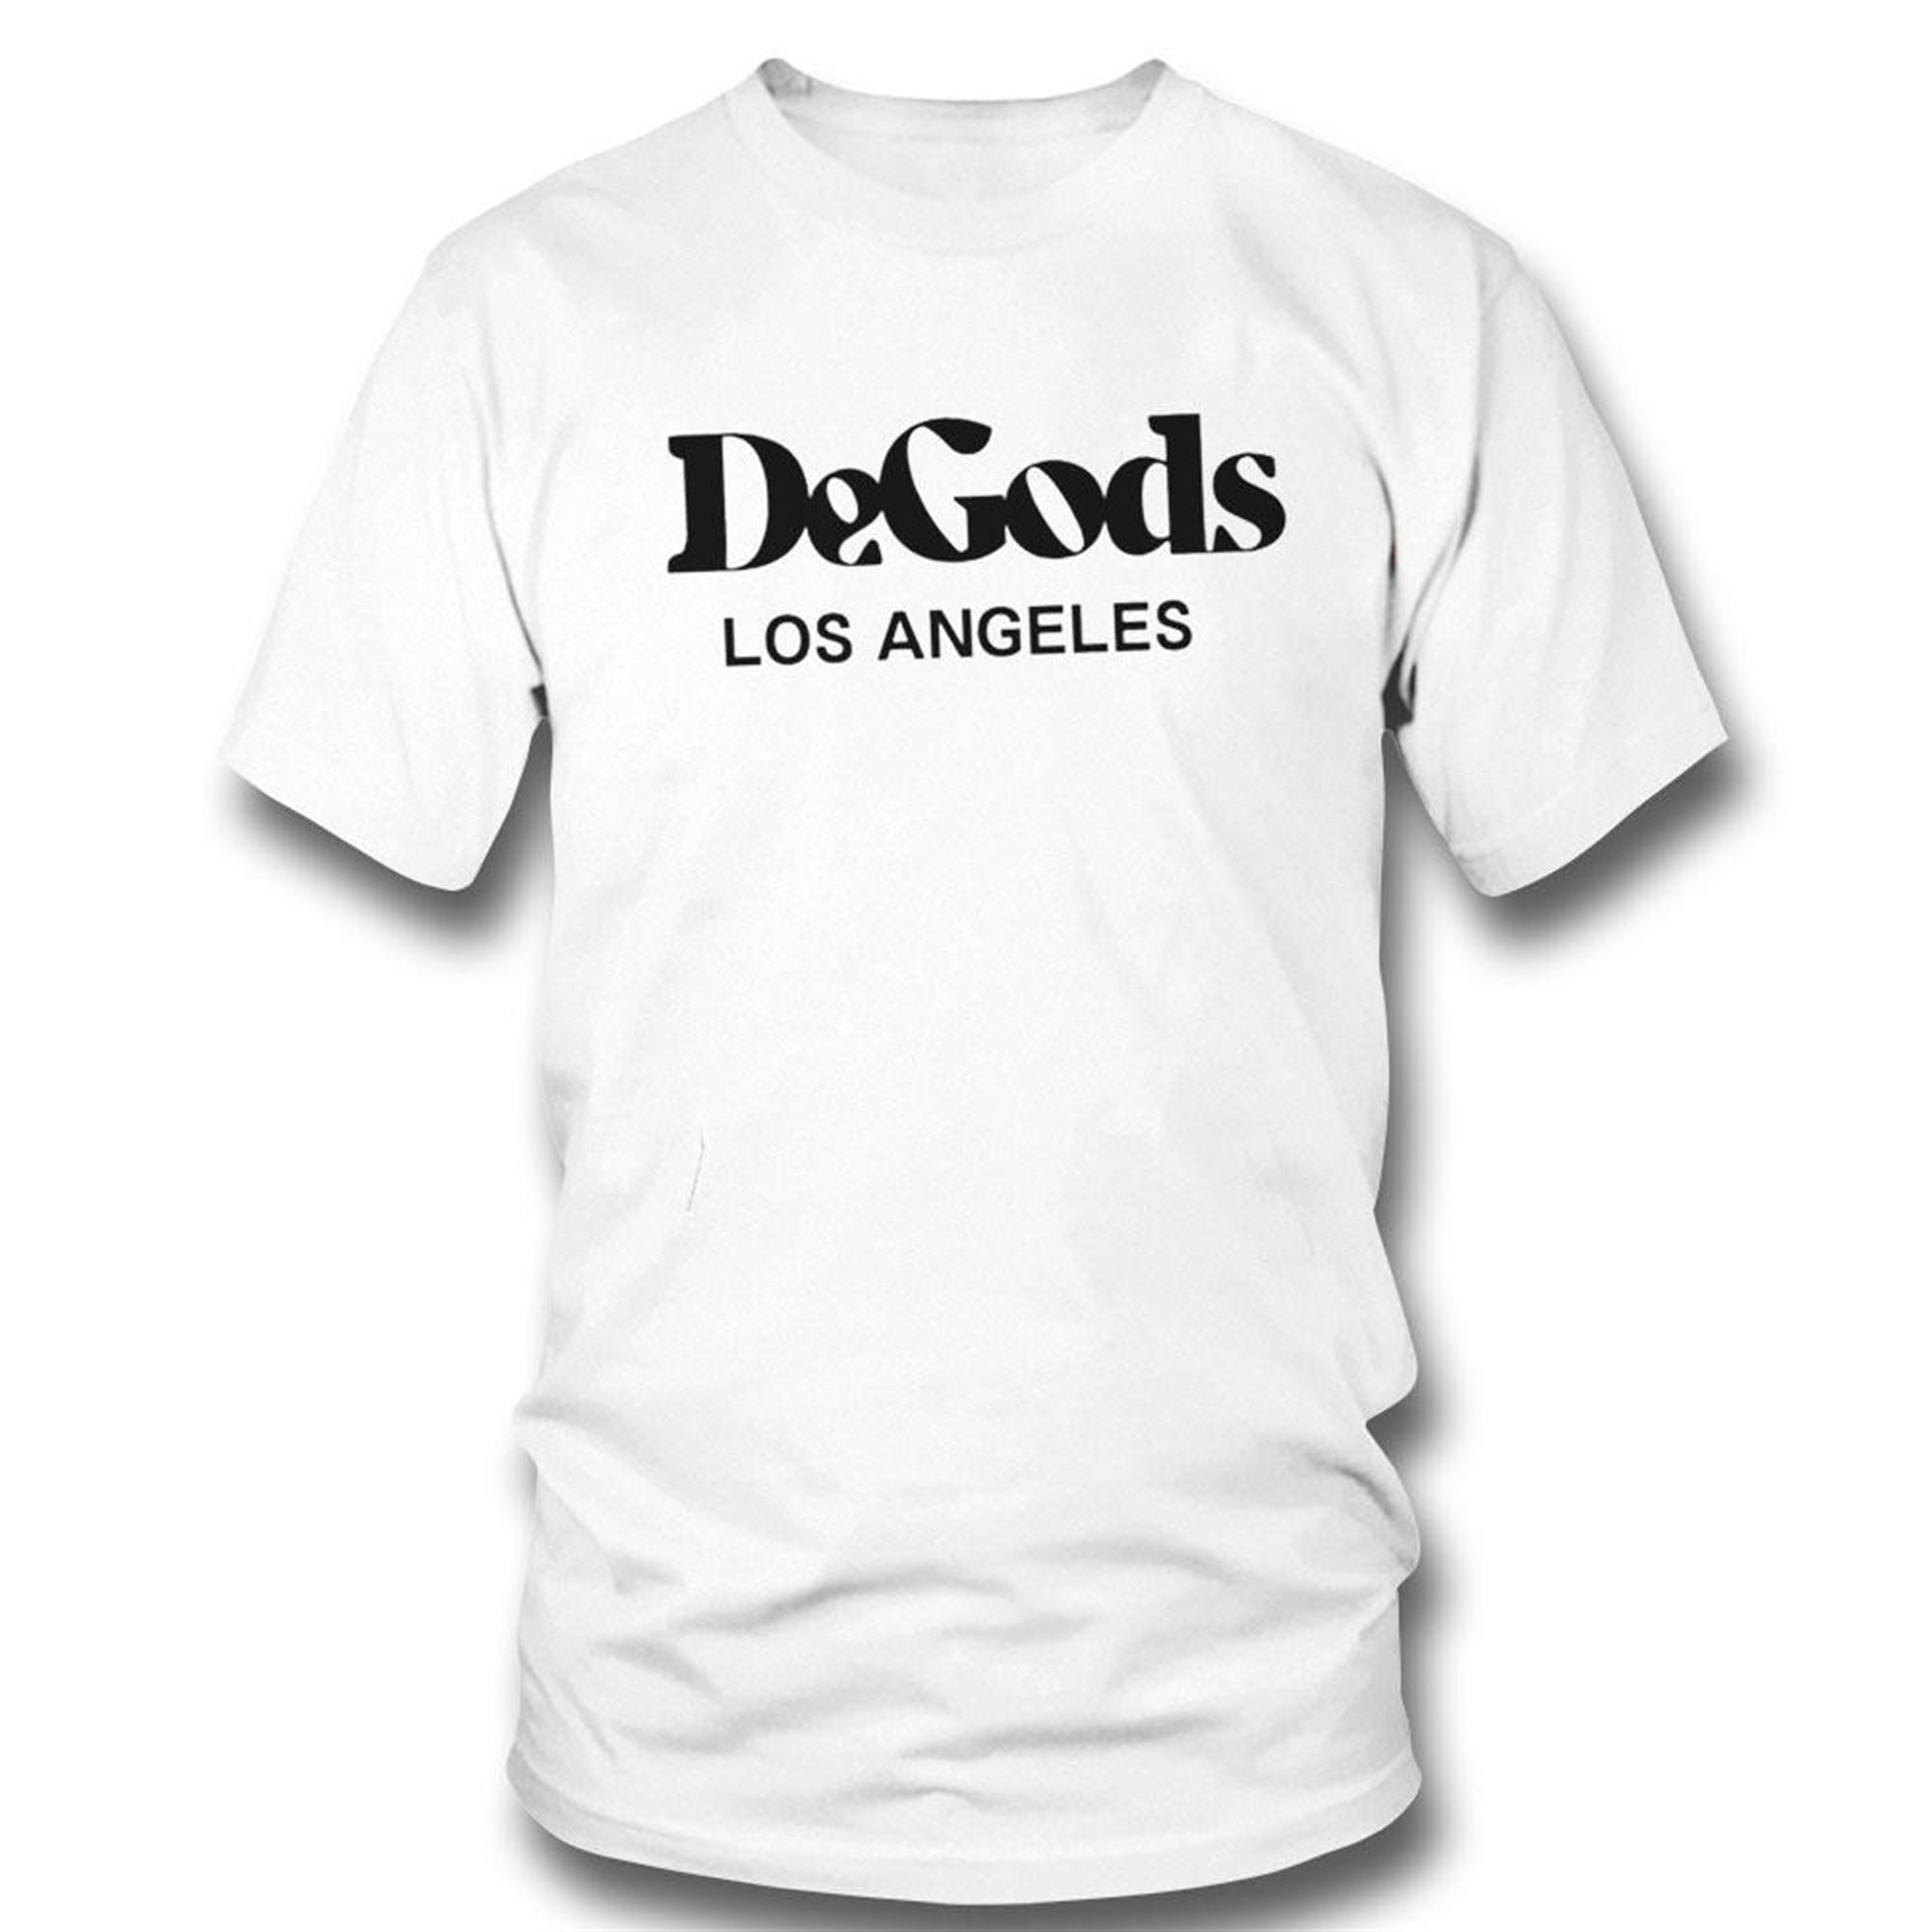 Degods Los Angeles Shirt